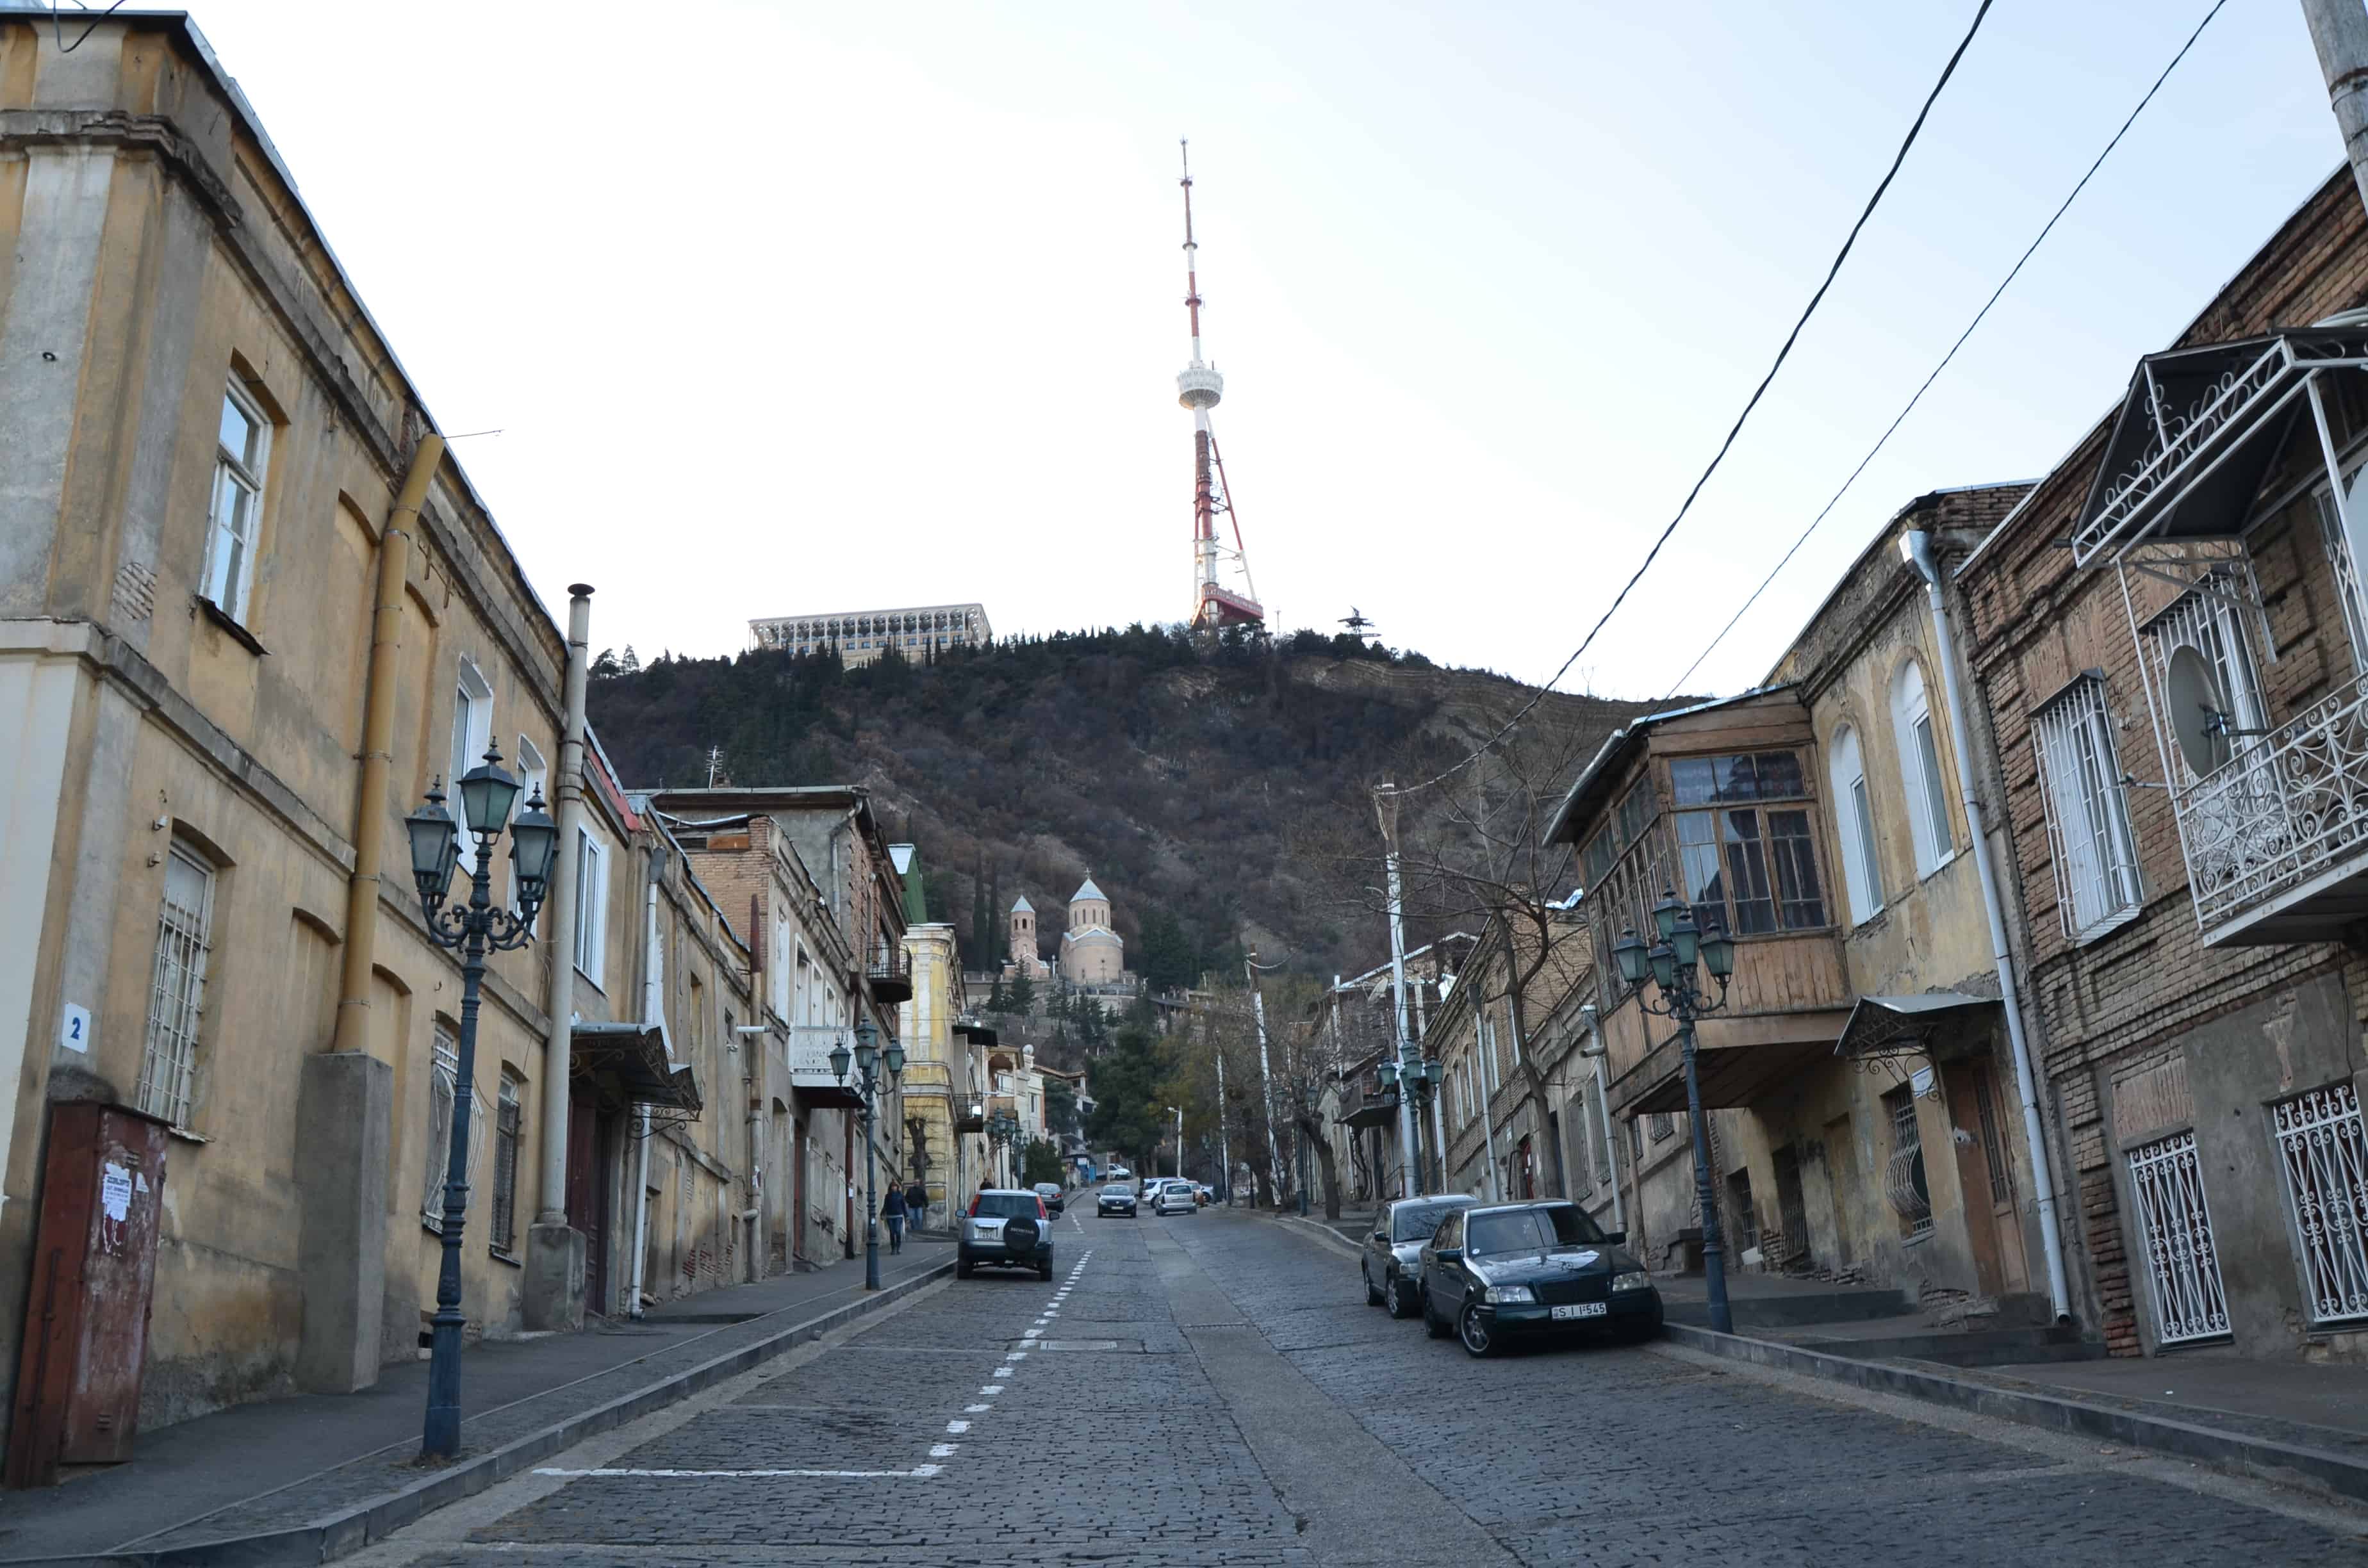 Mount Mtatsminda in Tbilisi, Georgia